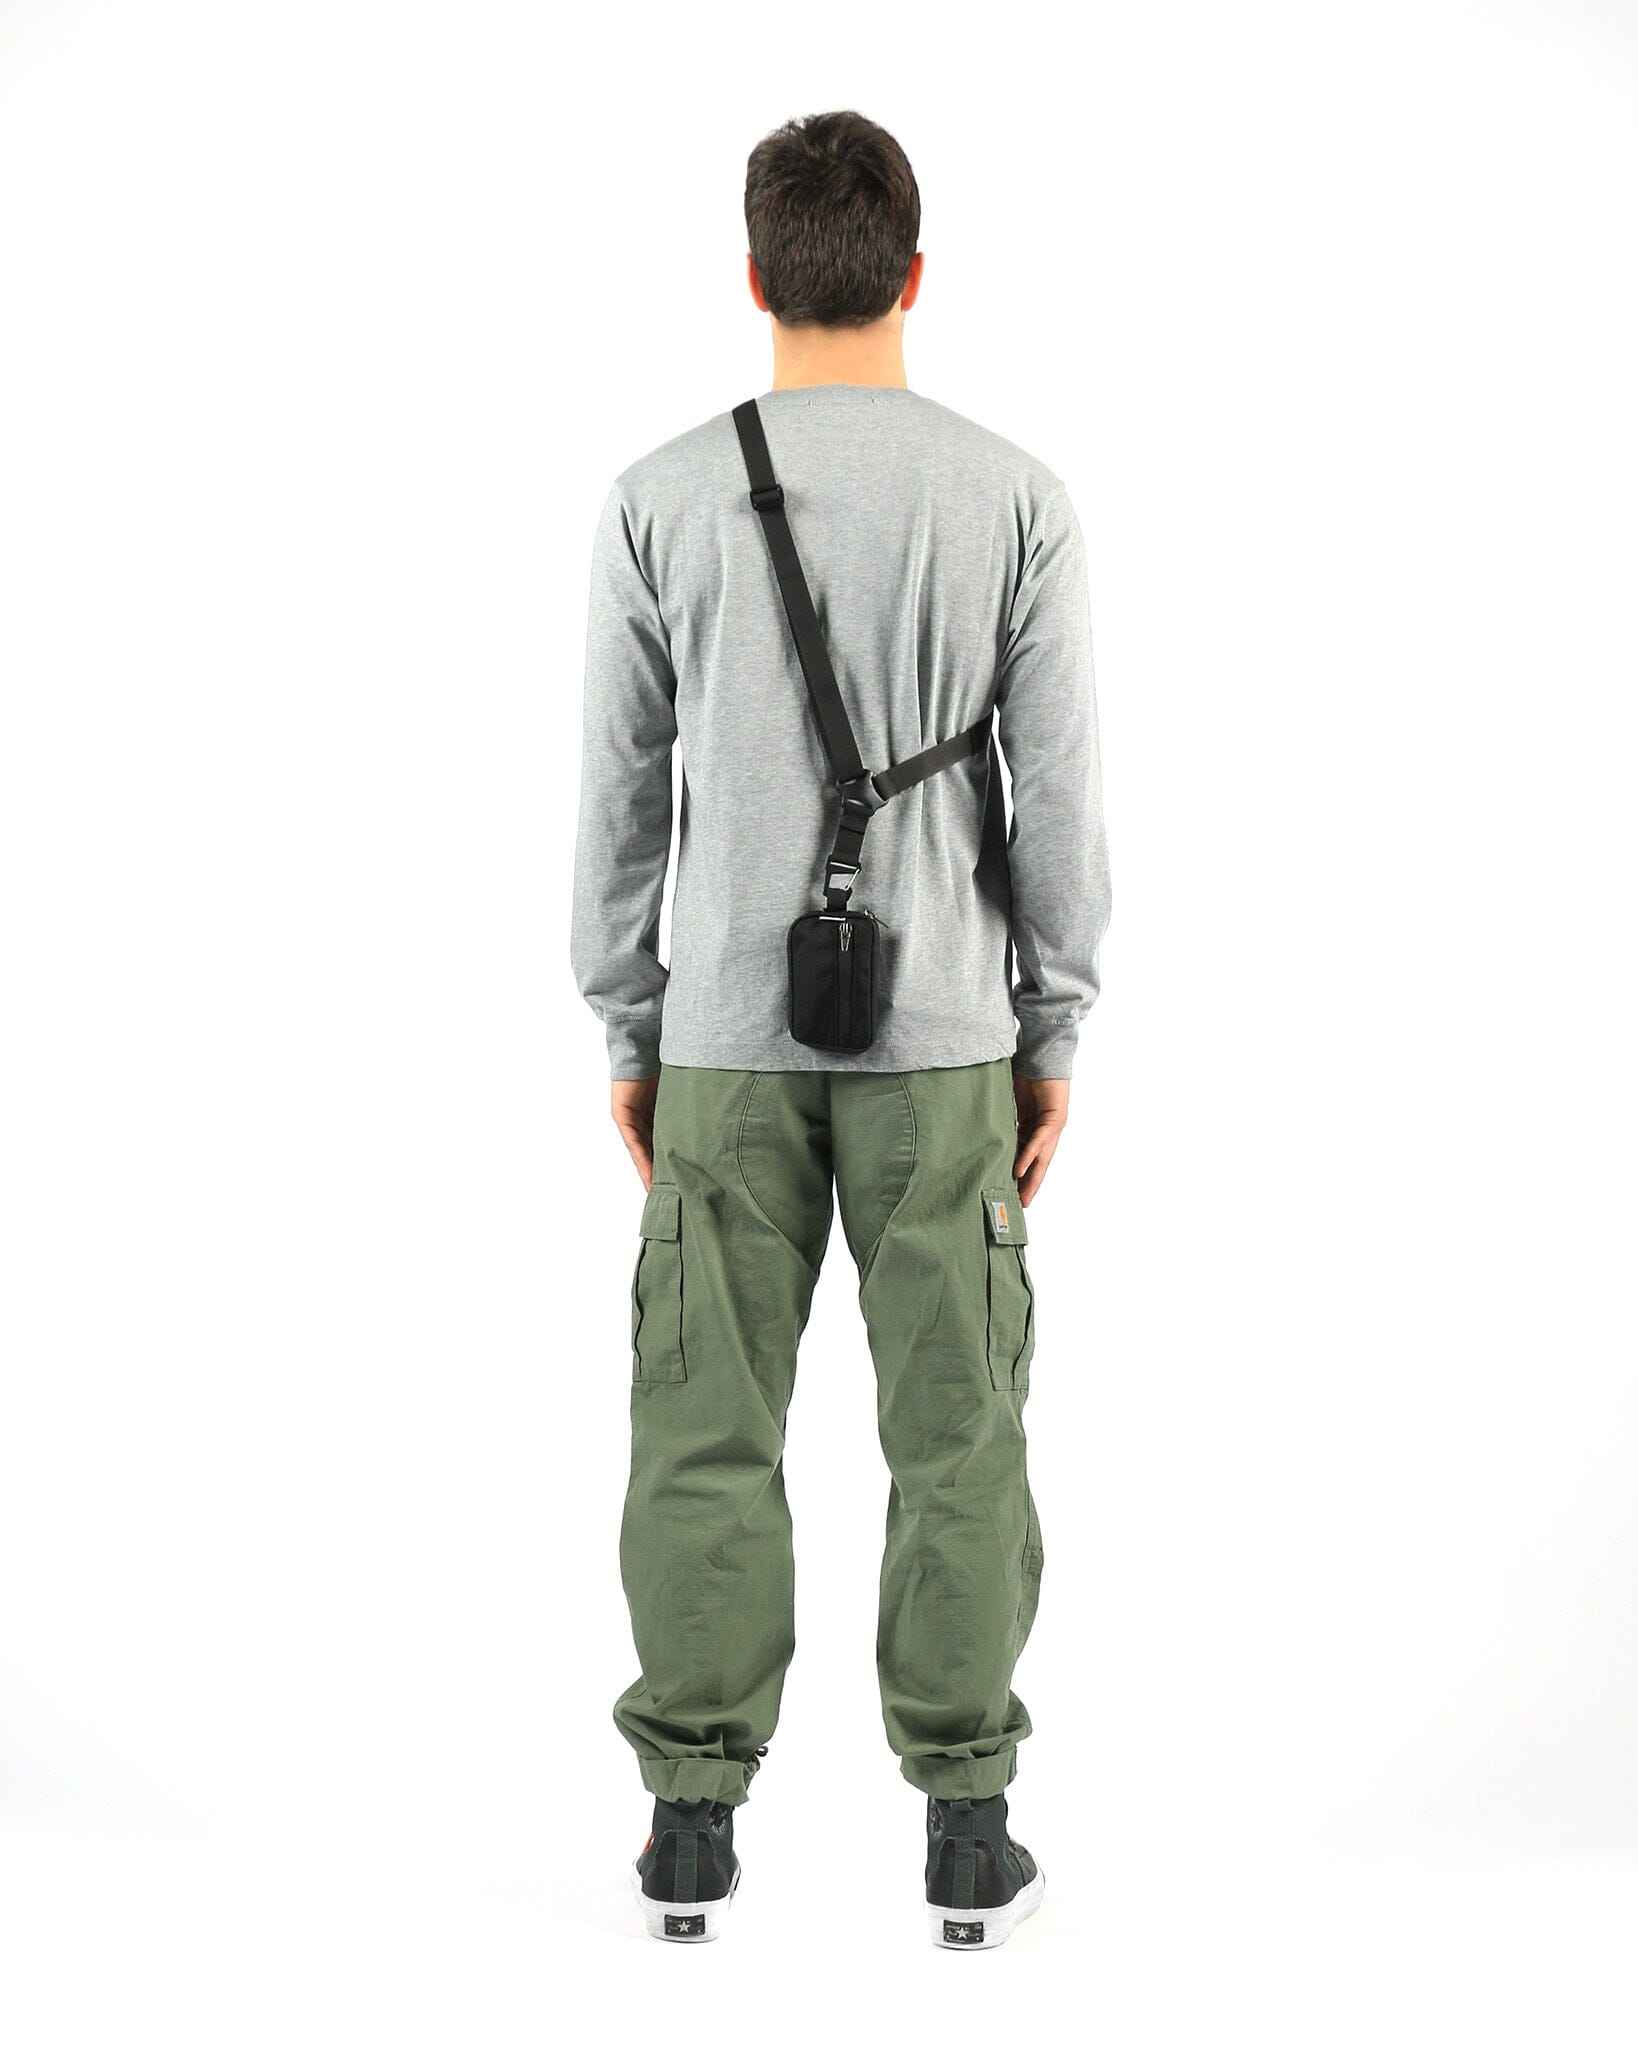 Mini Pocket - Stealth X-Pac RX30 Bag bolstr   